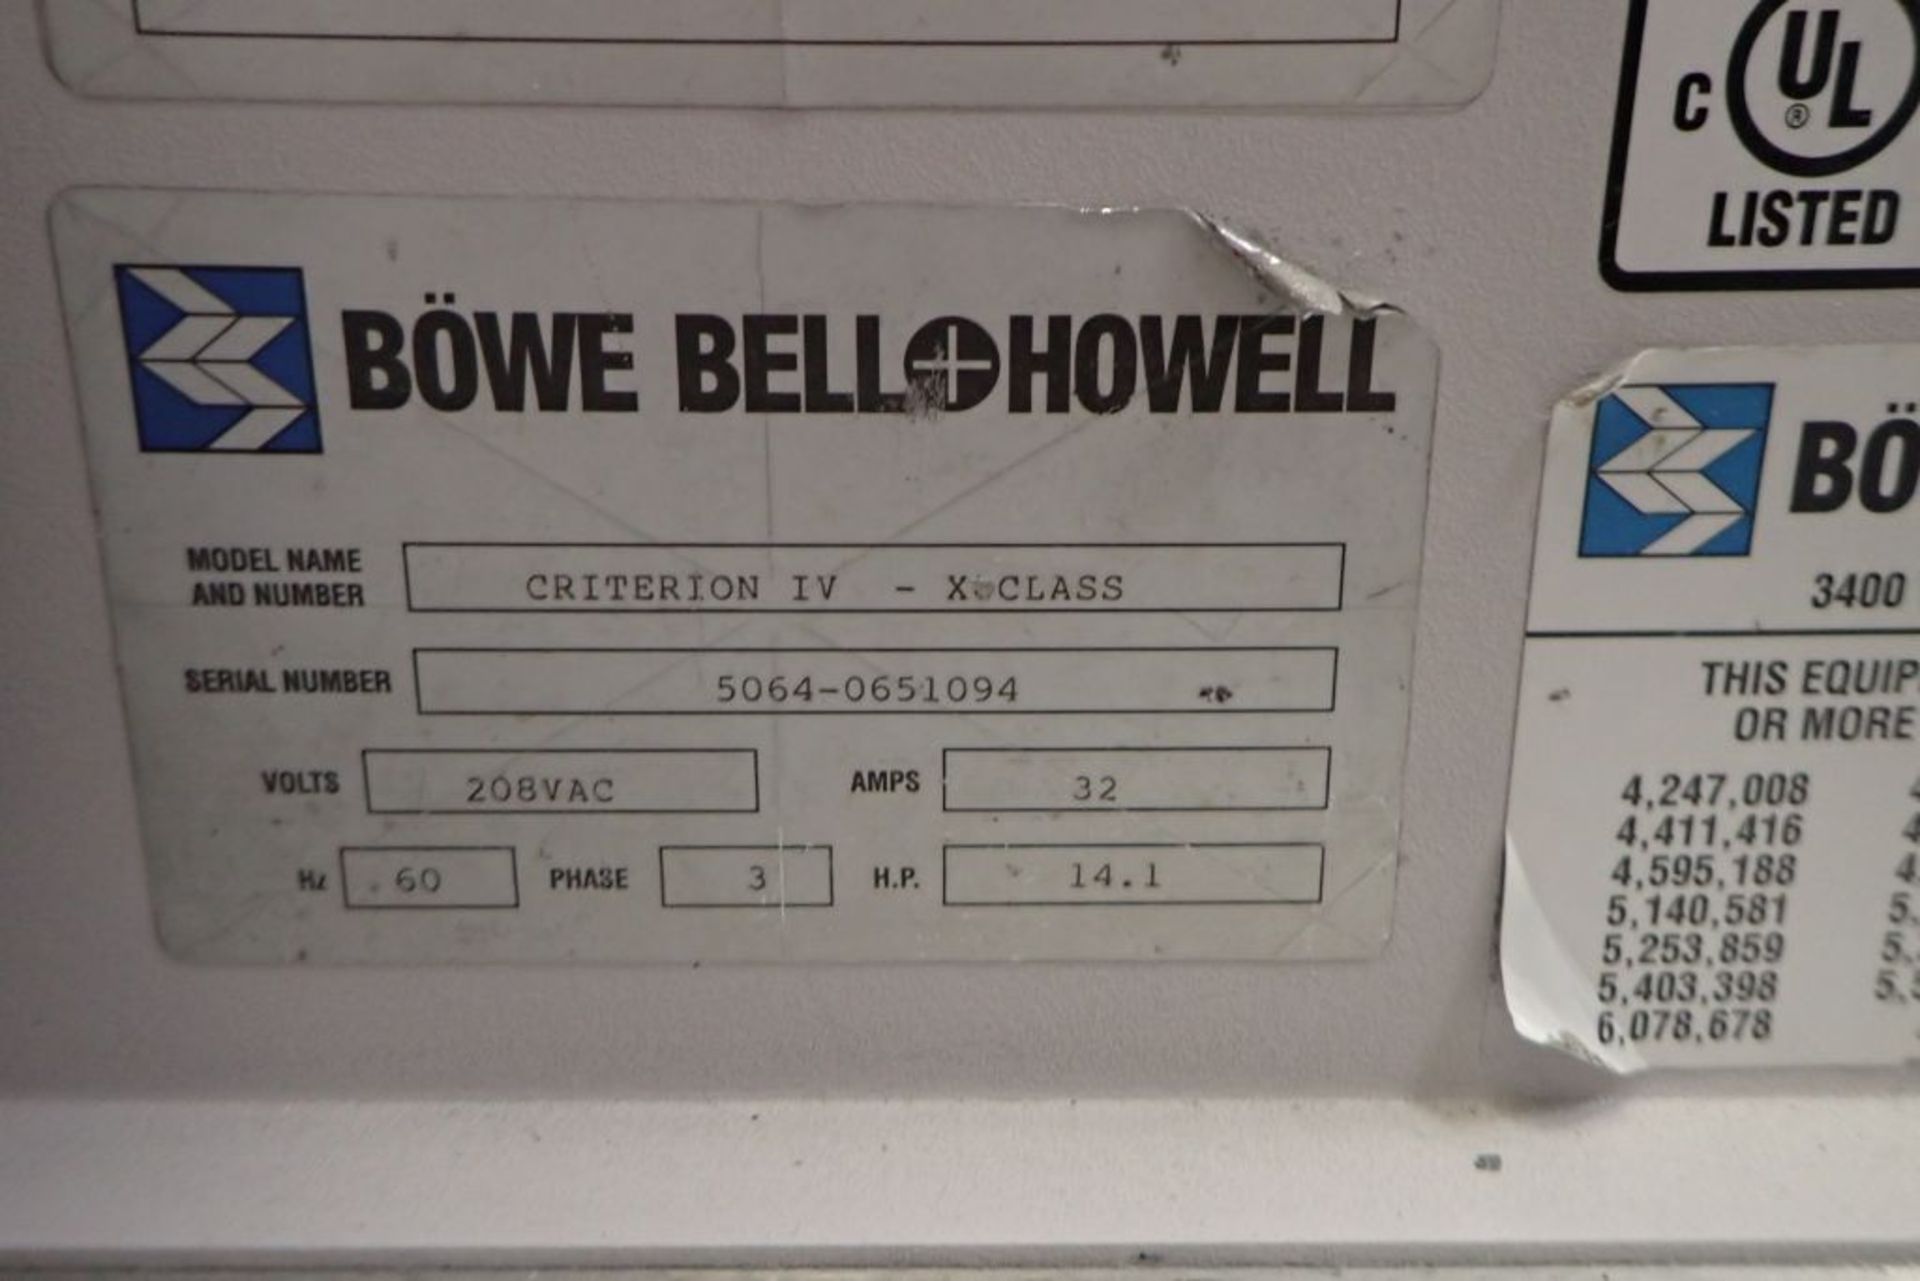 Bowe Bell Howell Criterion IV Sorter - Image 30 of 253